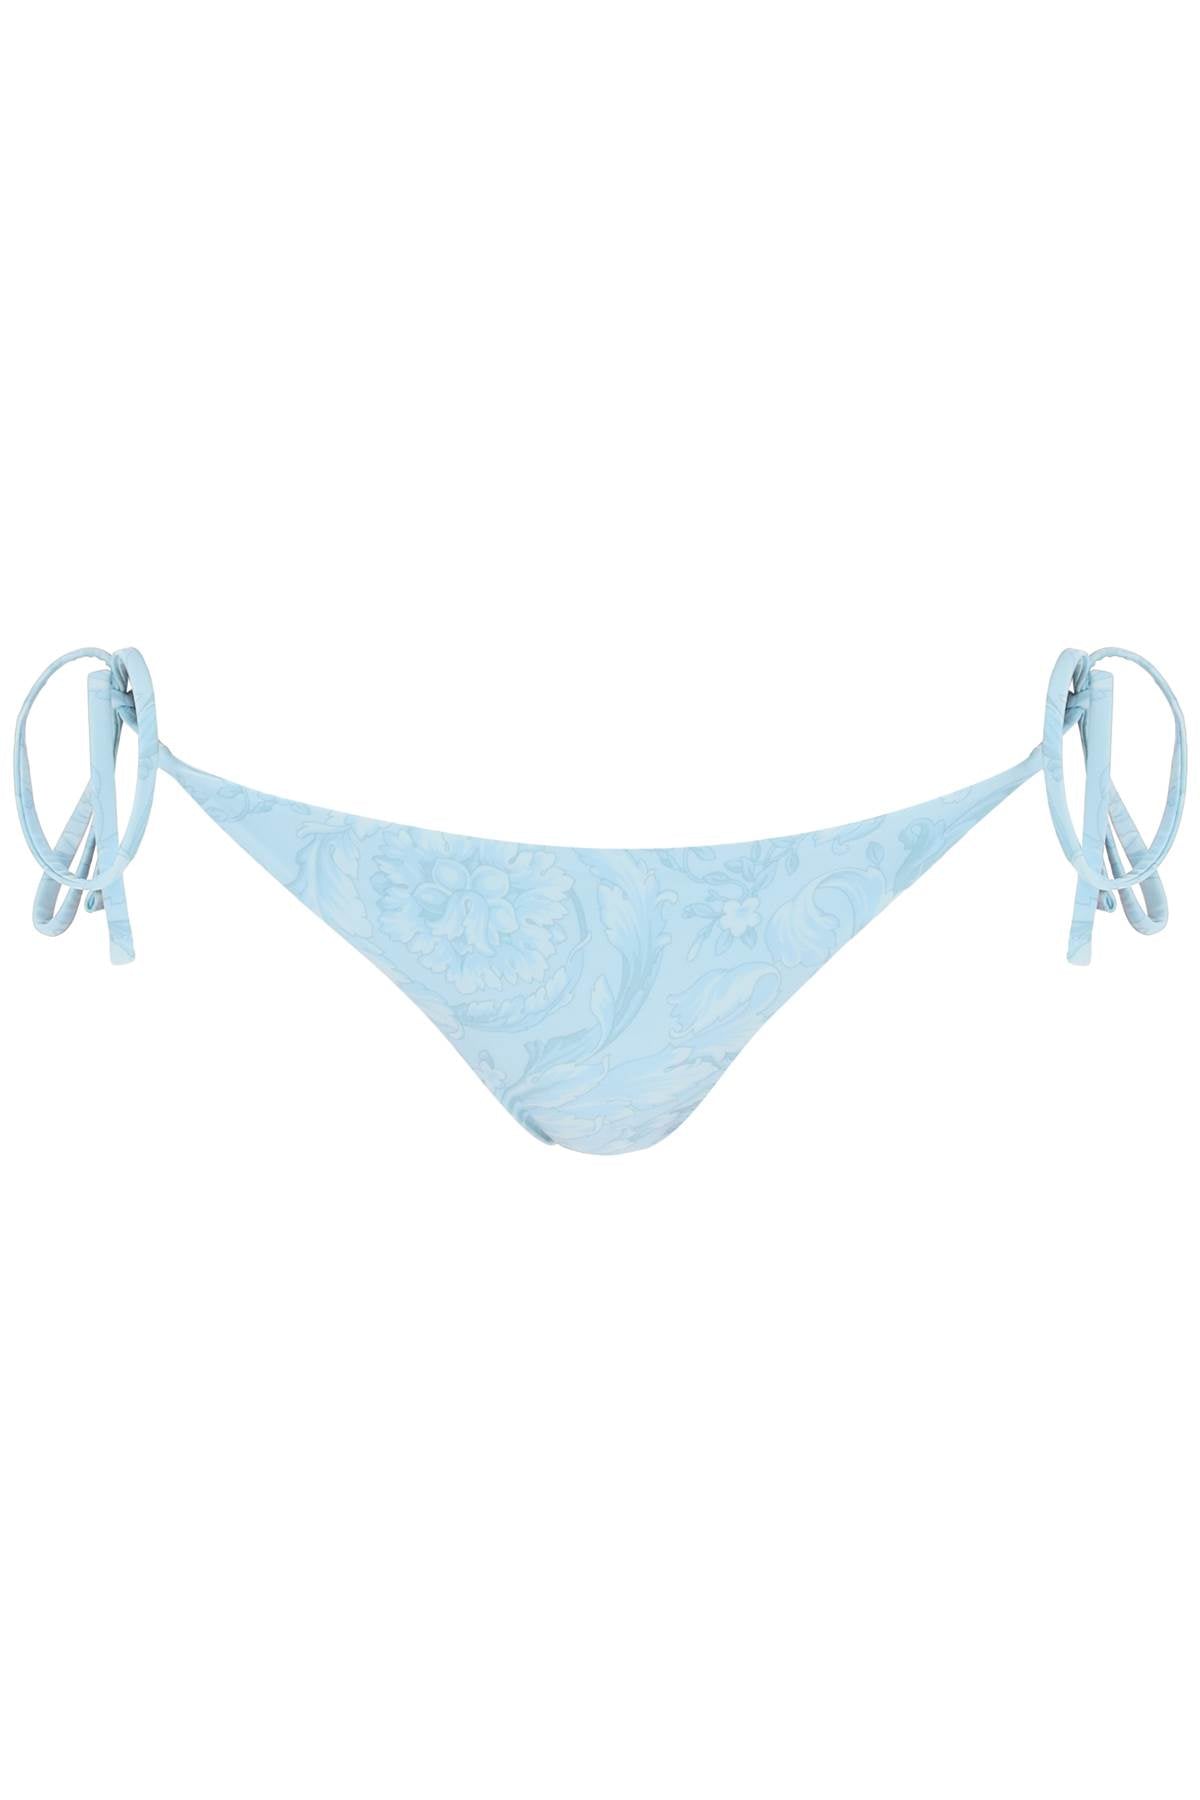 Versace baroque bikini brief ABD05027 A235870 PALE BLUE